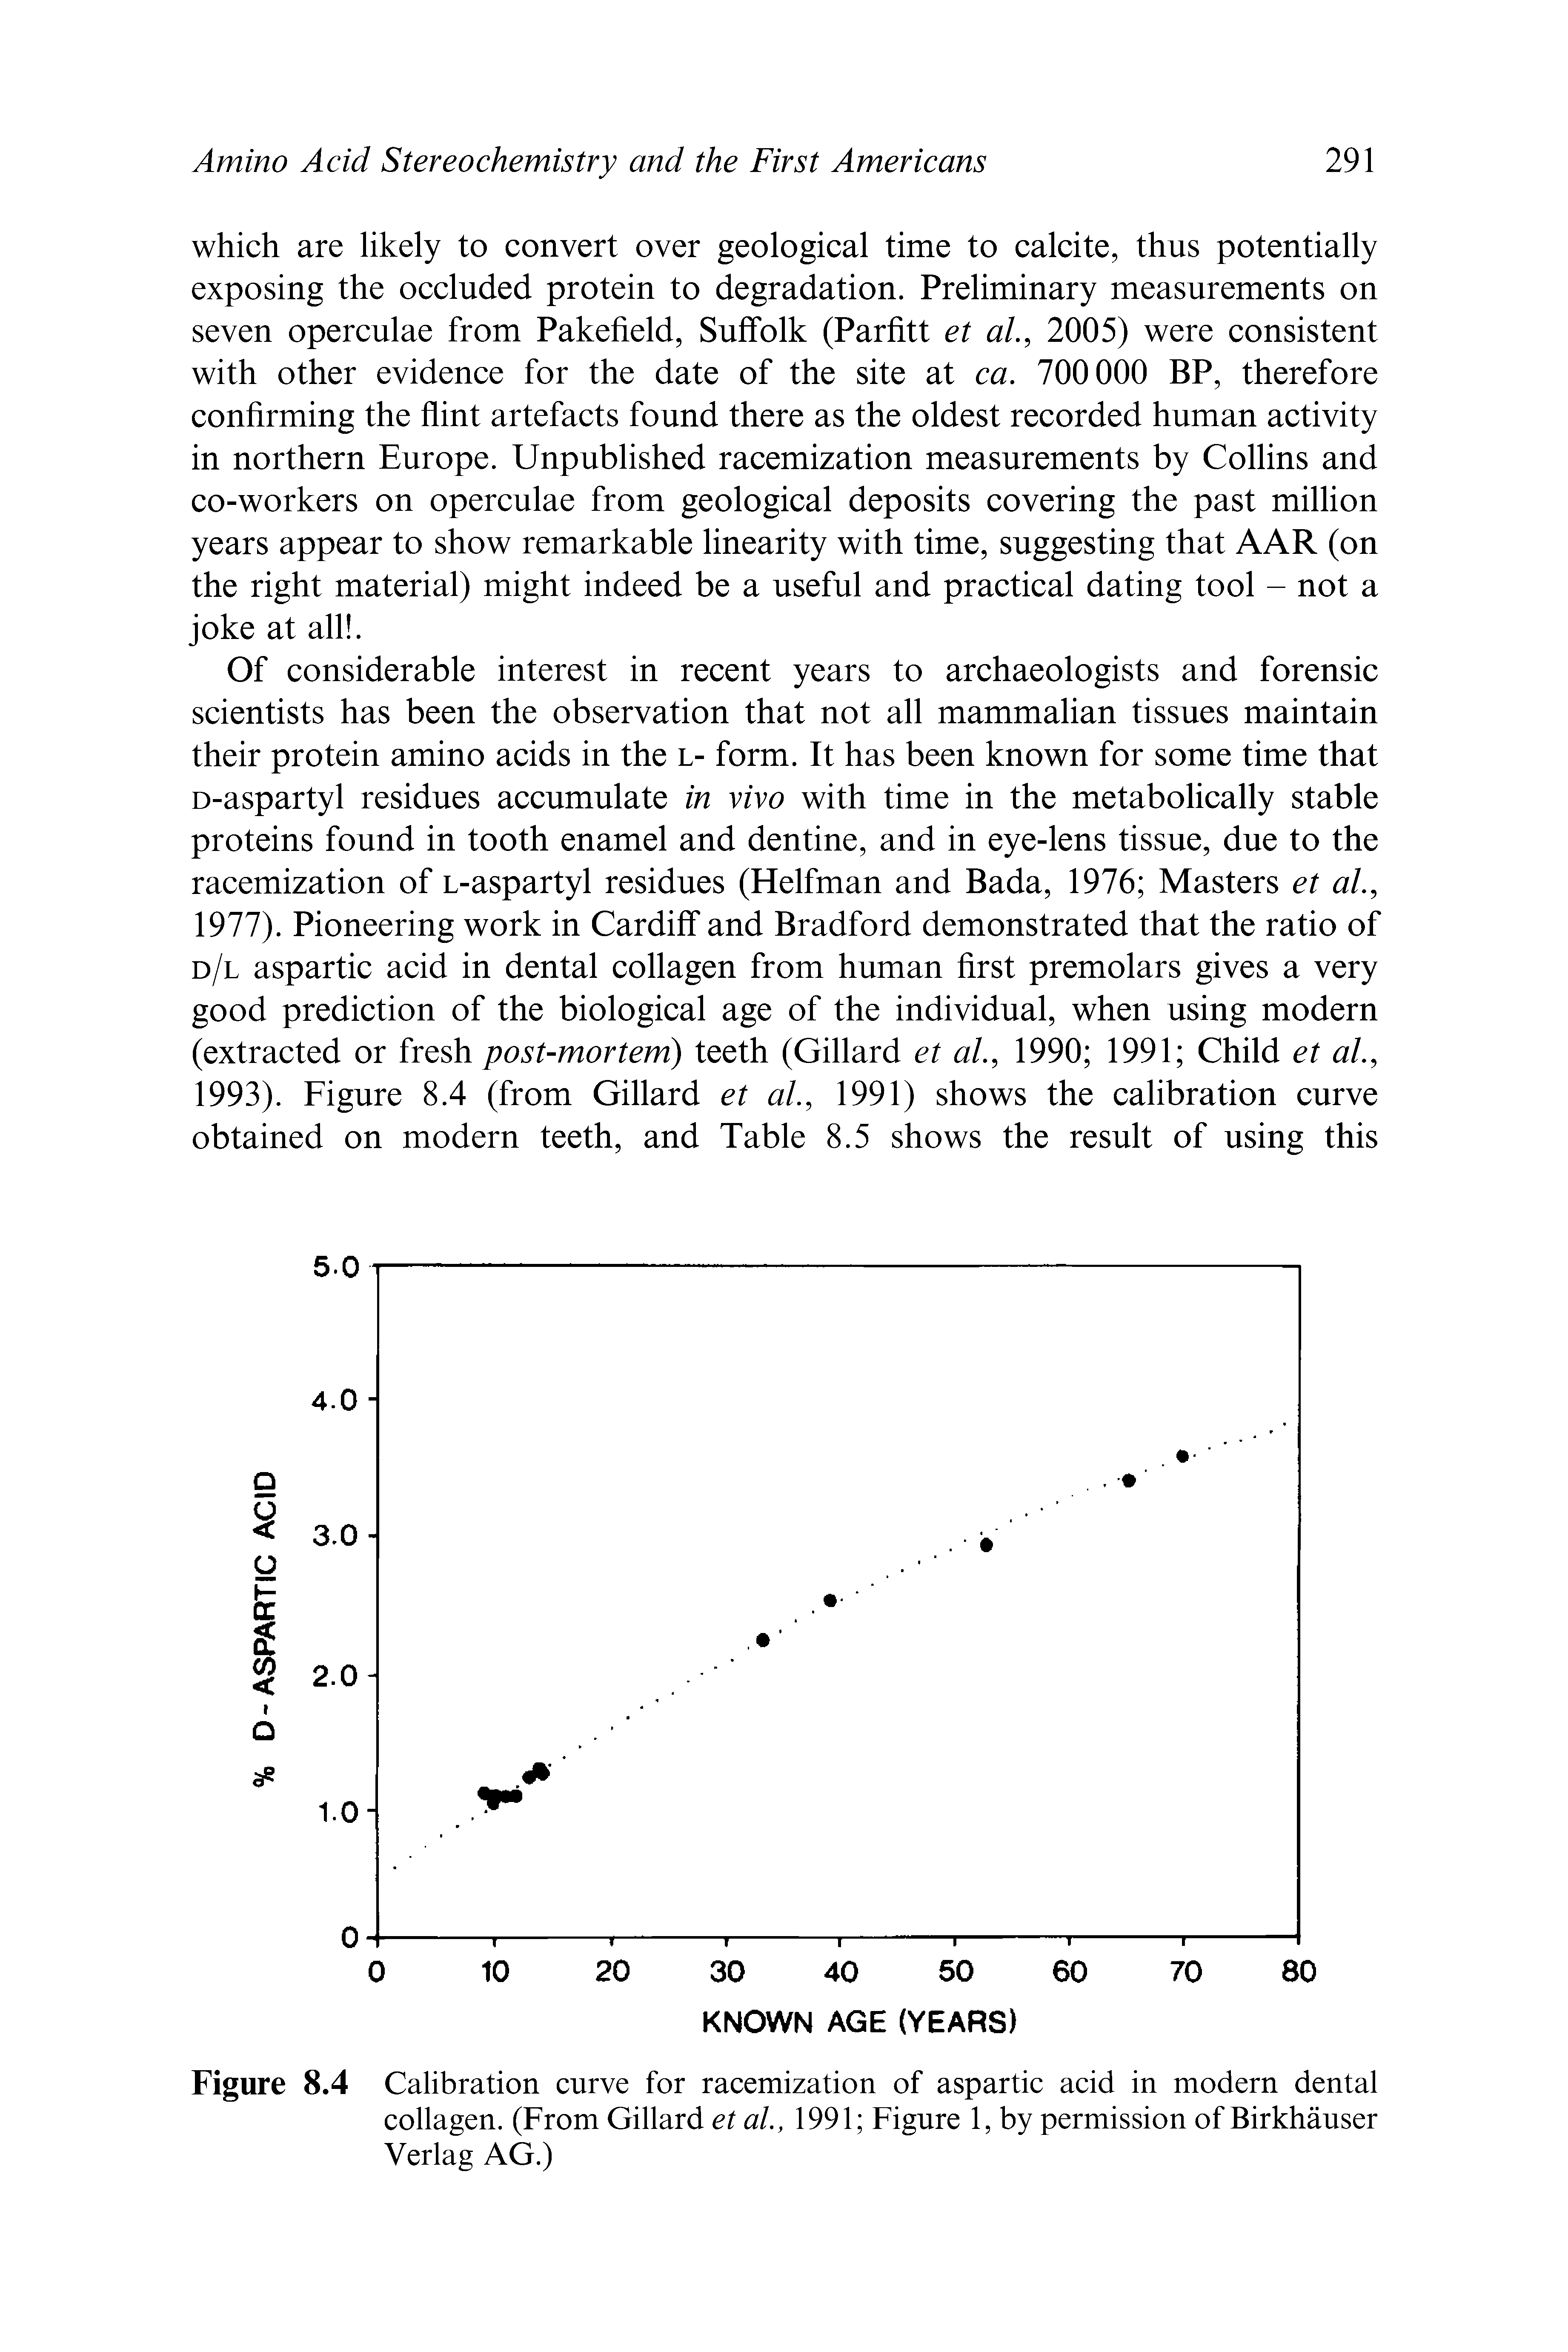 Figure 8.4 Calibration curve for racemization of aspartic acid in modern dental collagen. (From Gillard et al., 1991 Figure 1, by permission of Birkhauser Yerlag AG.)...